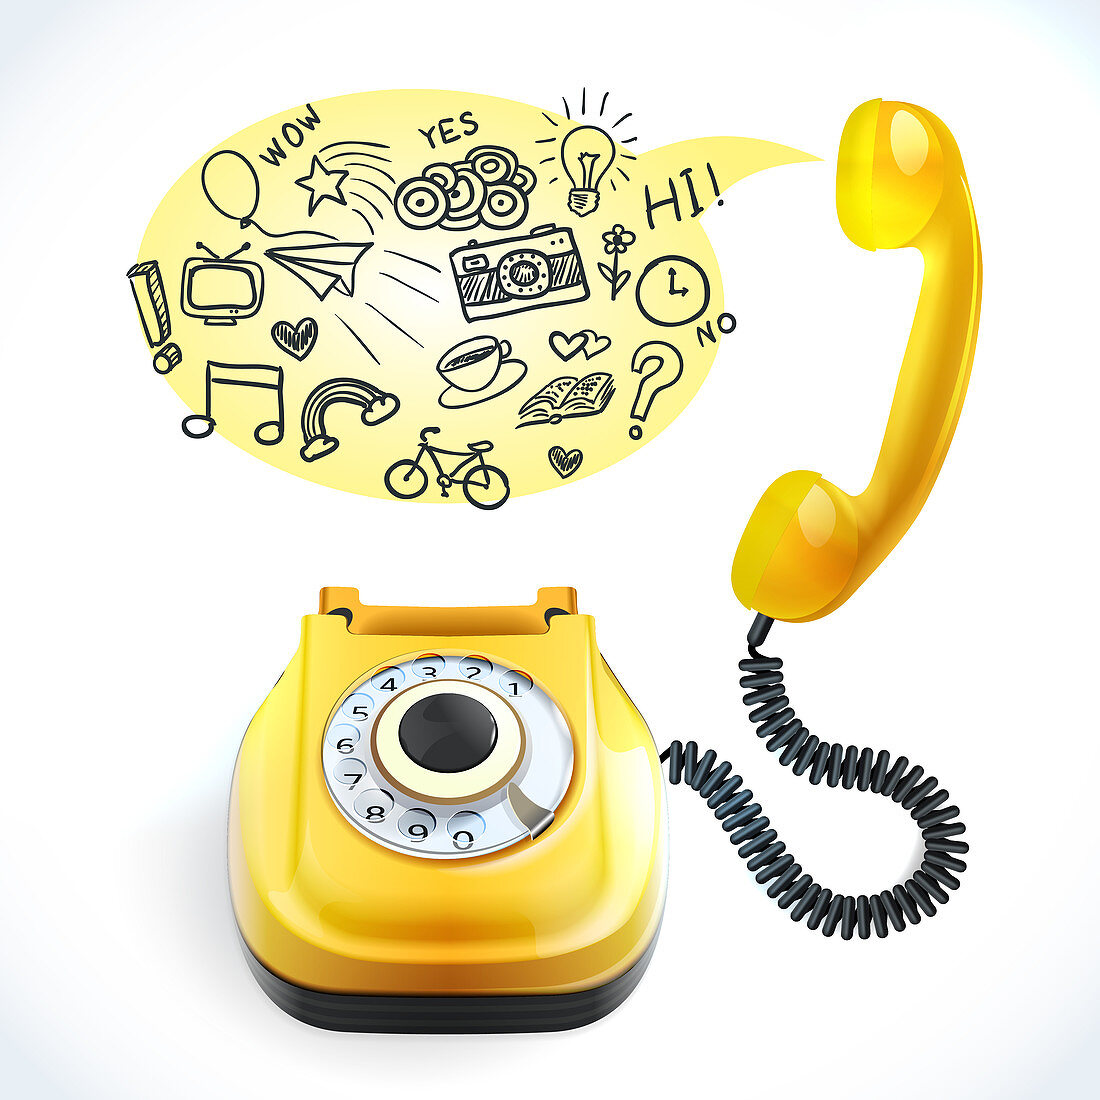 Phone call, illustration